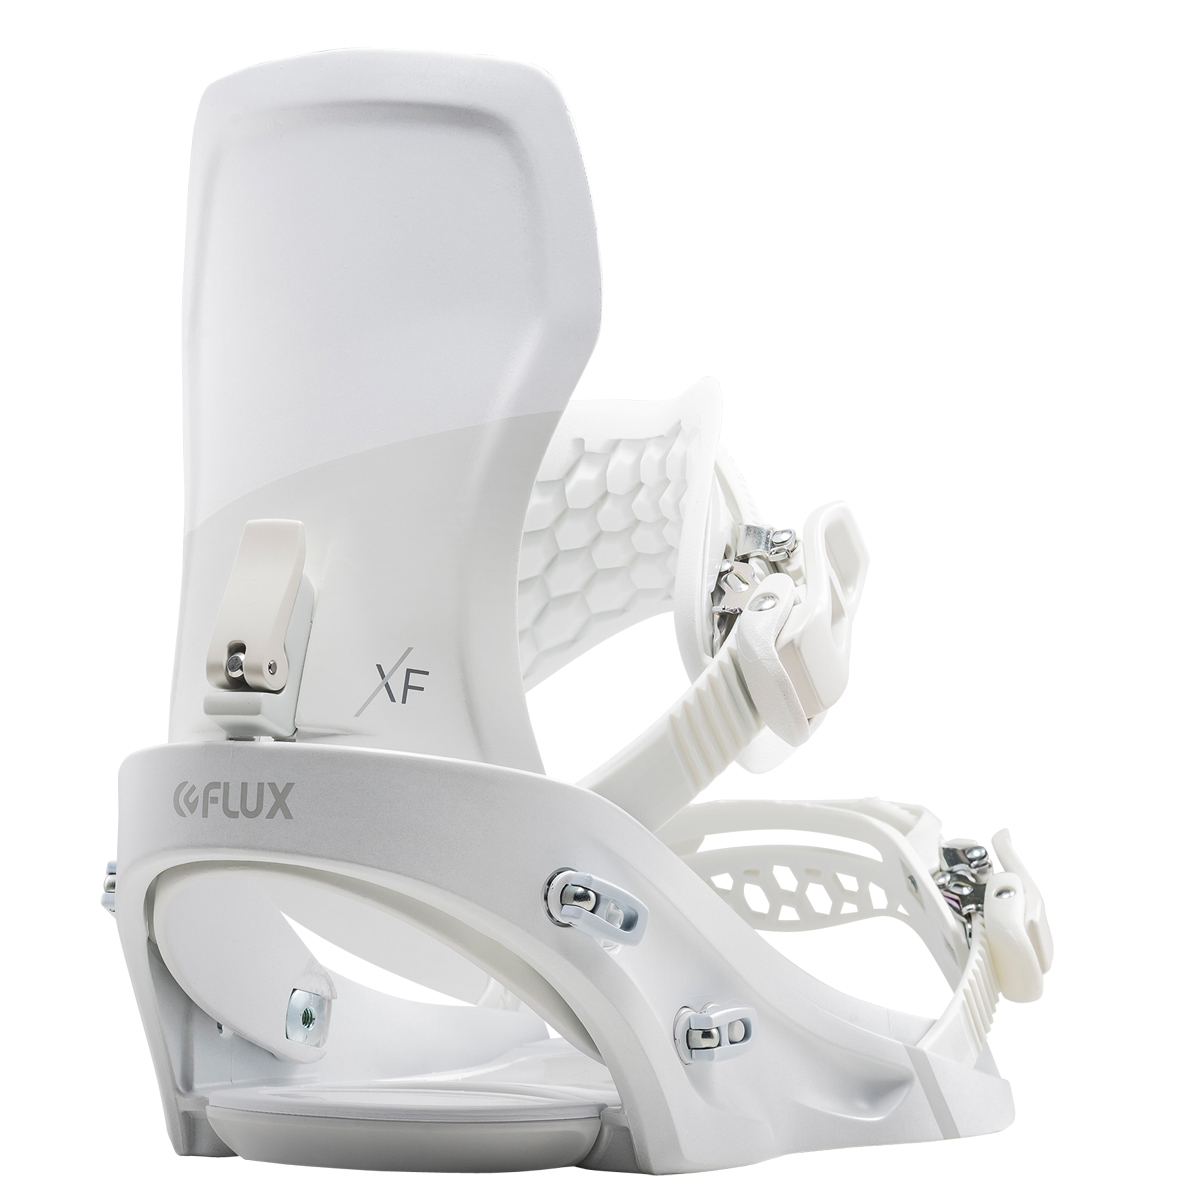 Buy BINDINGS MEN Flux XF Metallic White 2020 at Board-Club, price for